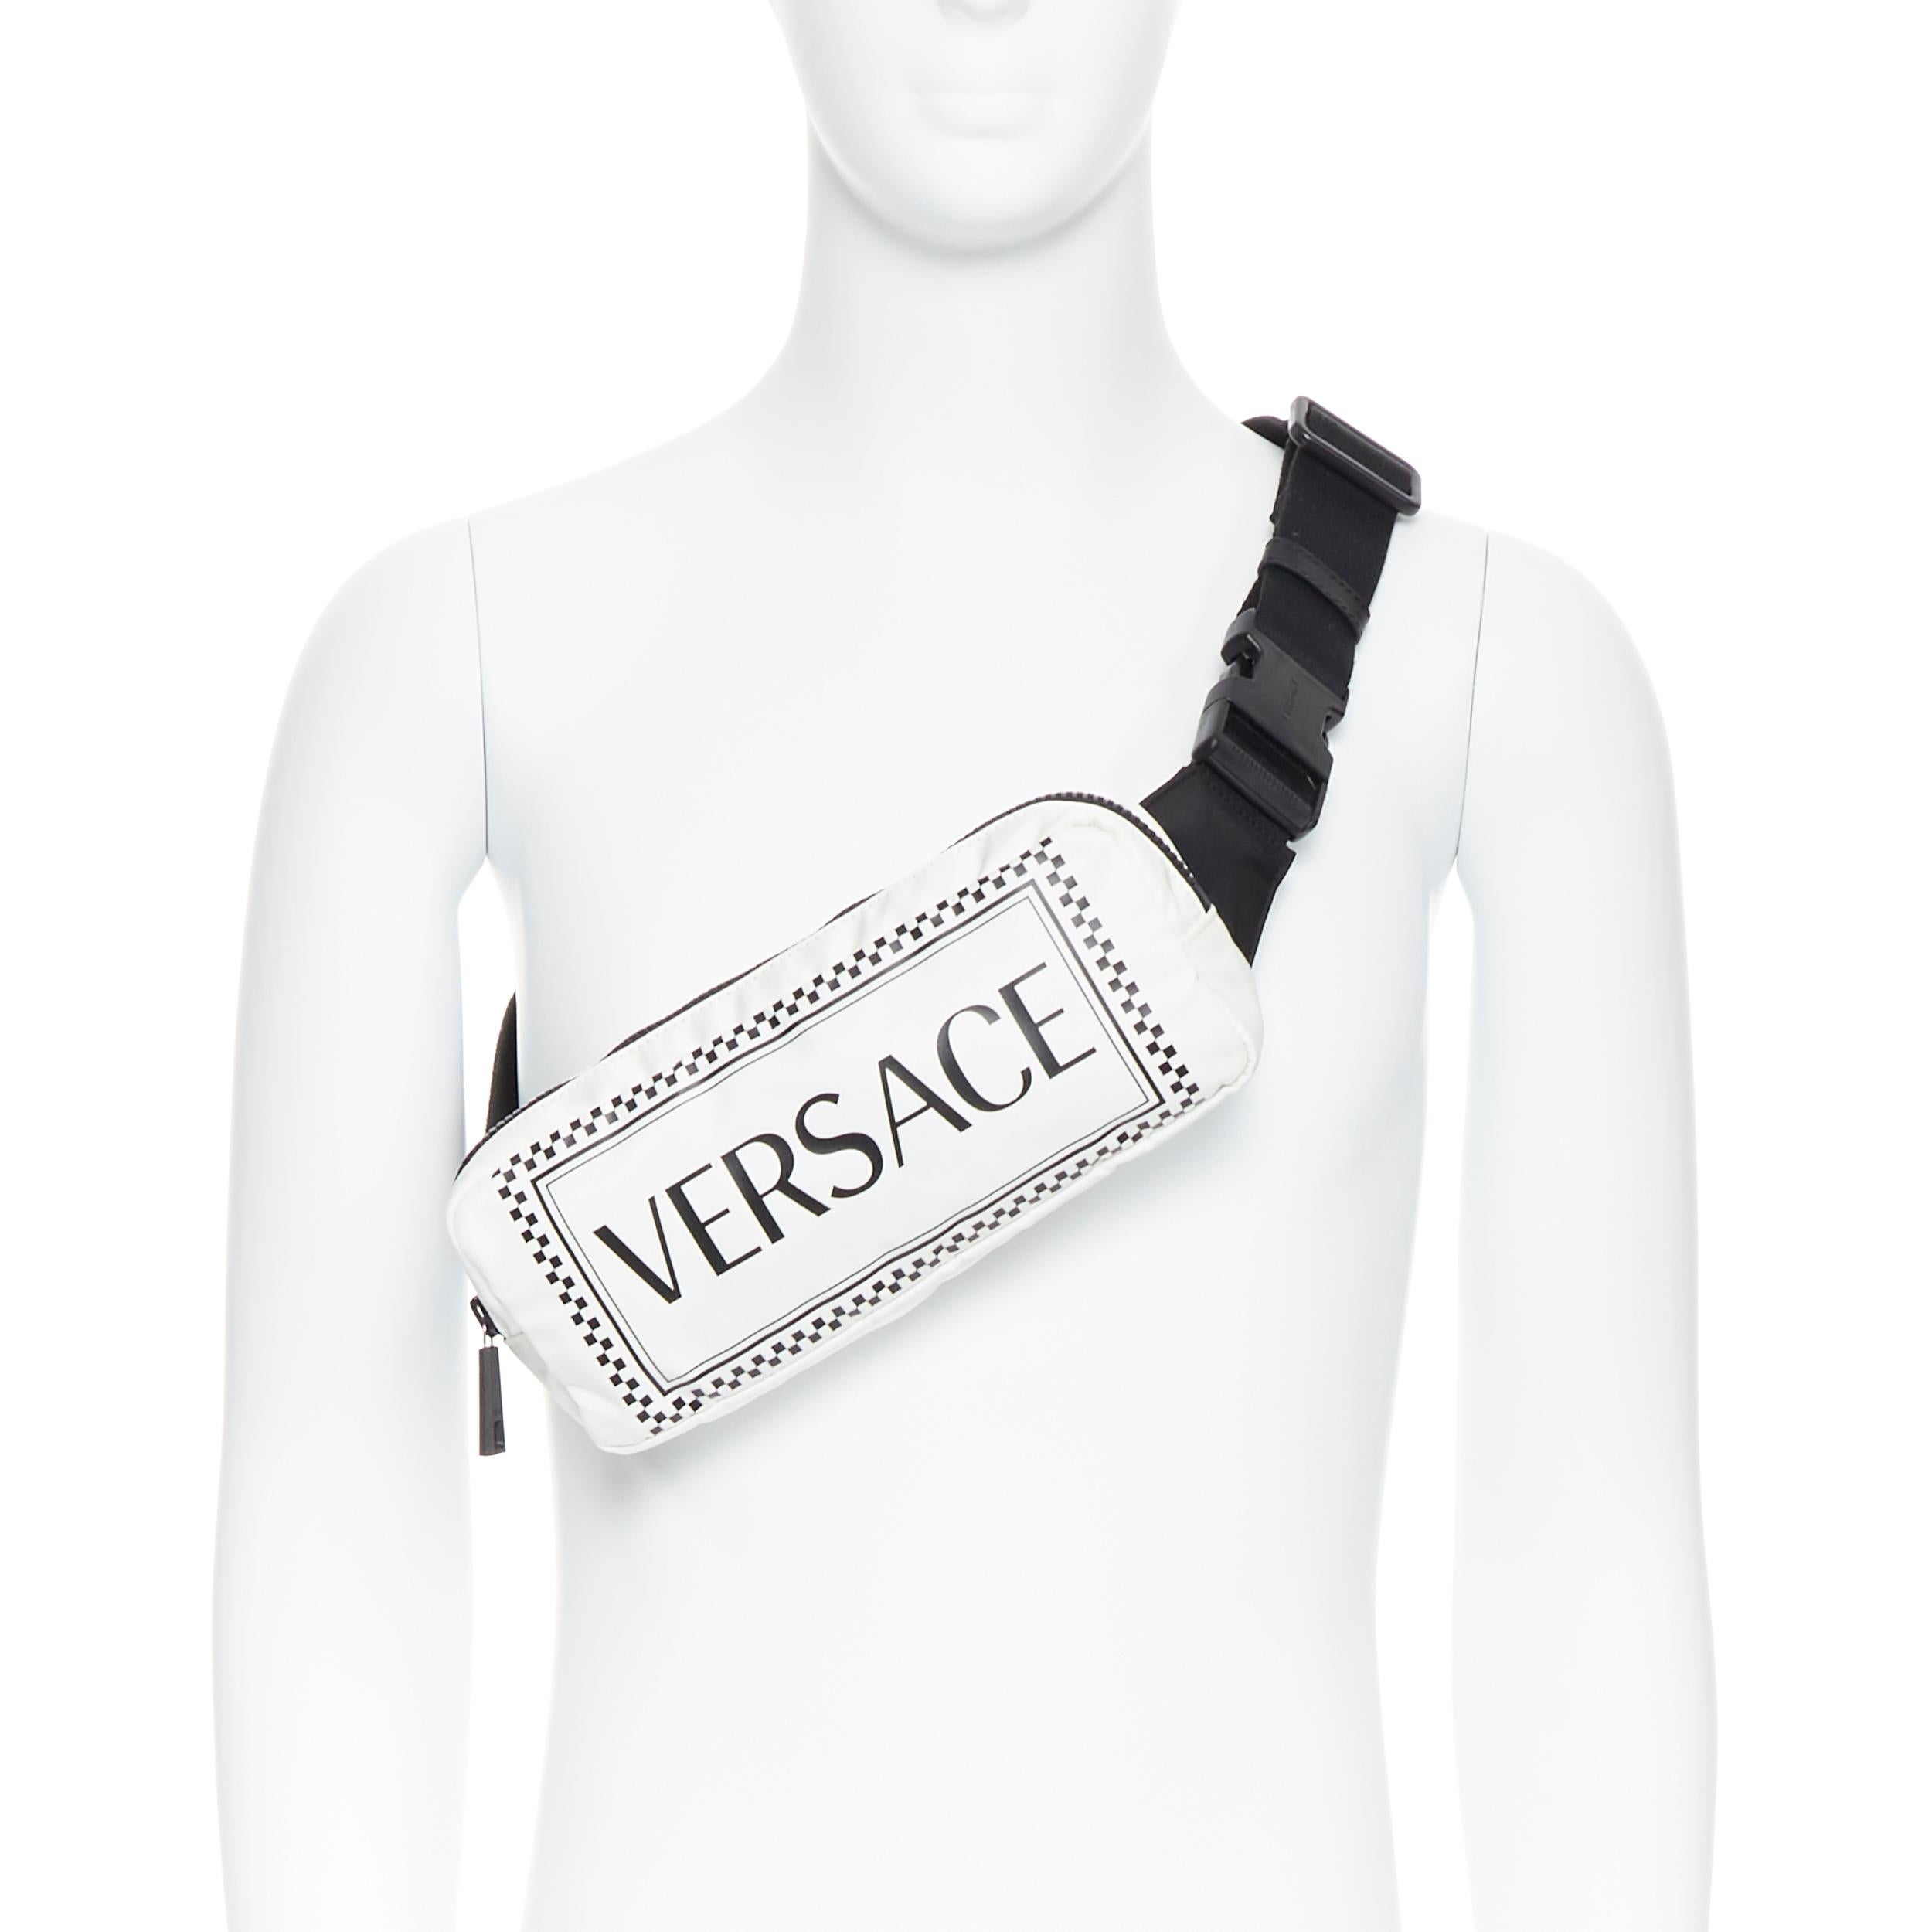 new VERSACE 90's vintage box logo print white nylon crossbody waist belt bag 
Brand: Versace
Designer: Donatella Versace
Collection: Fall Winter 2019
Model Name / Style: Belt bag
Material: Nylon
Color: White
Pattern: Solid
Closure: Zip
Extra Detail: